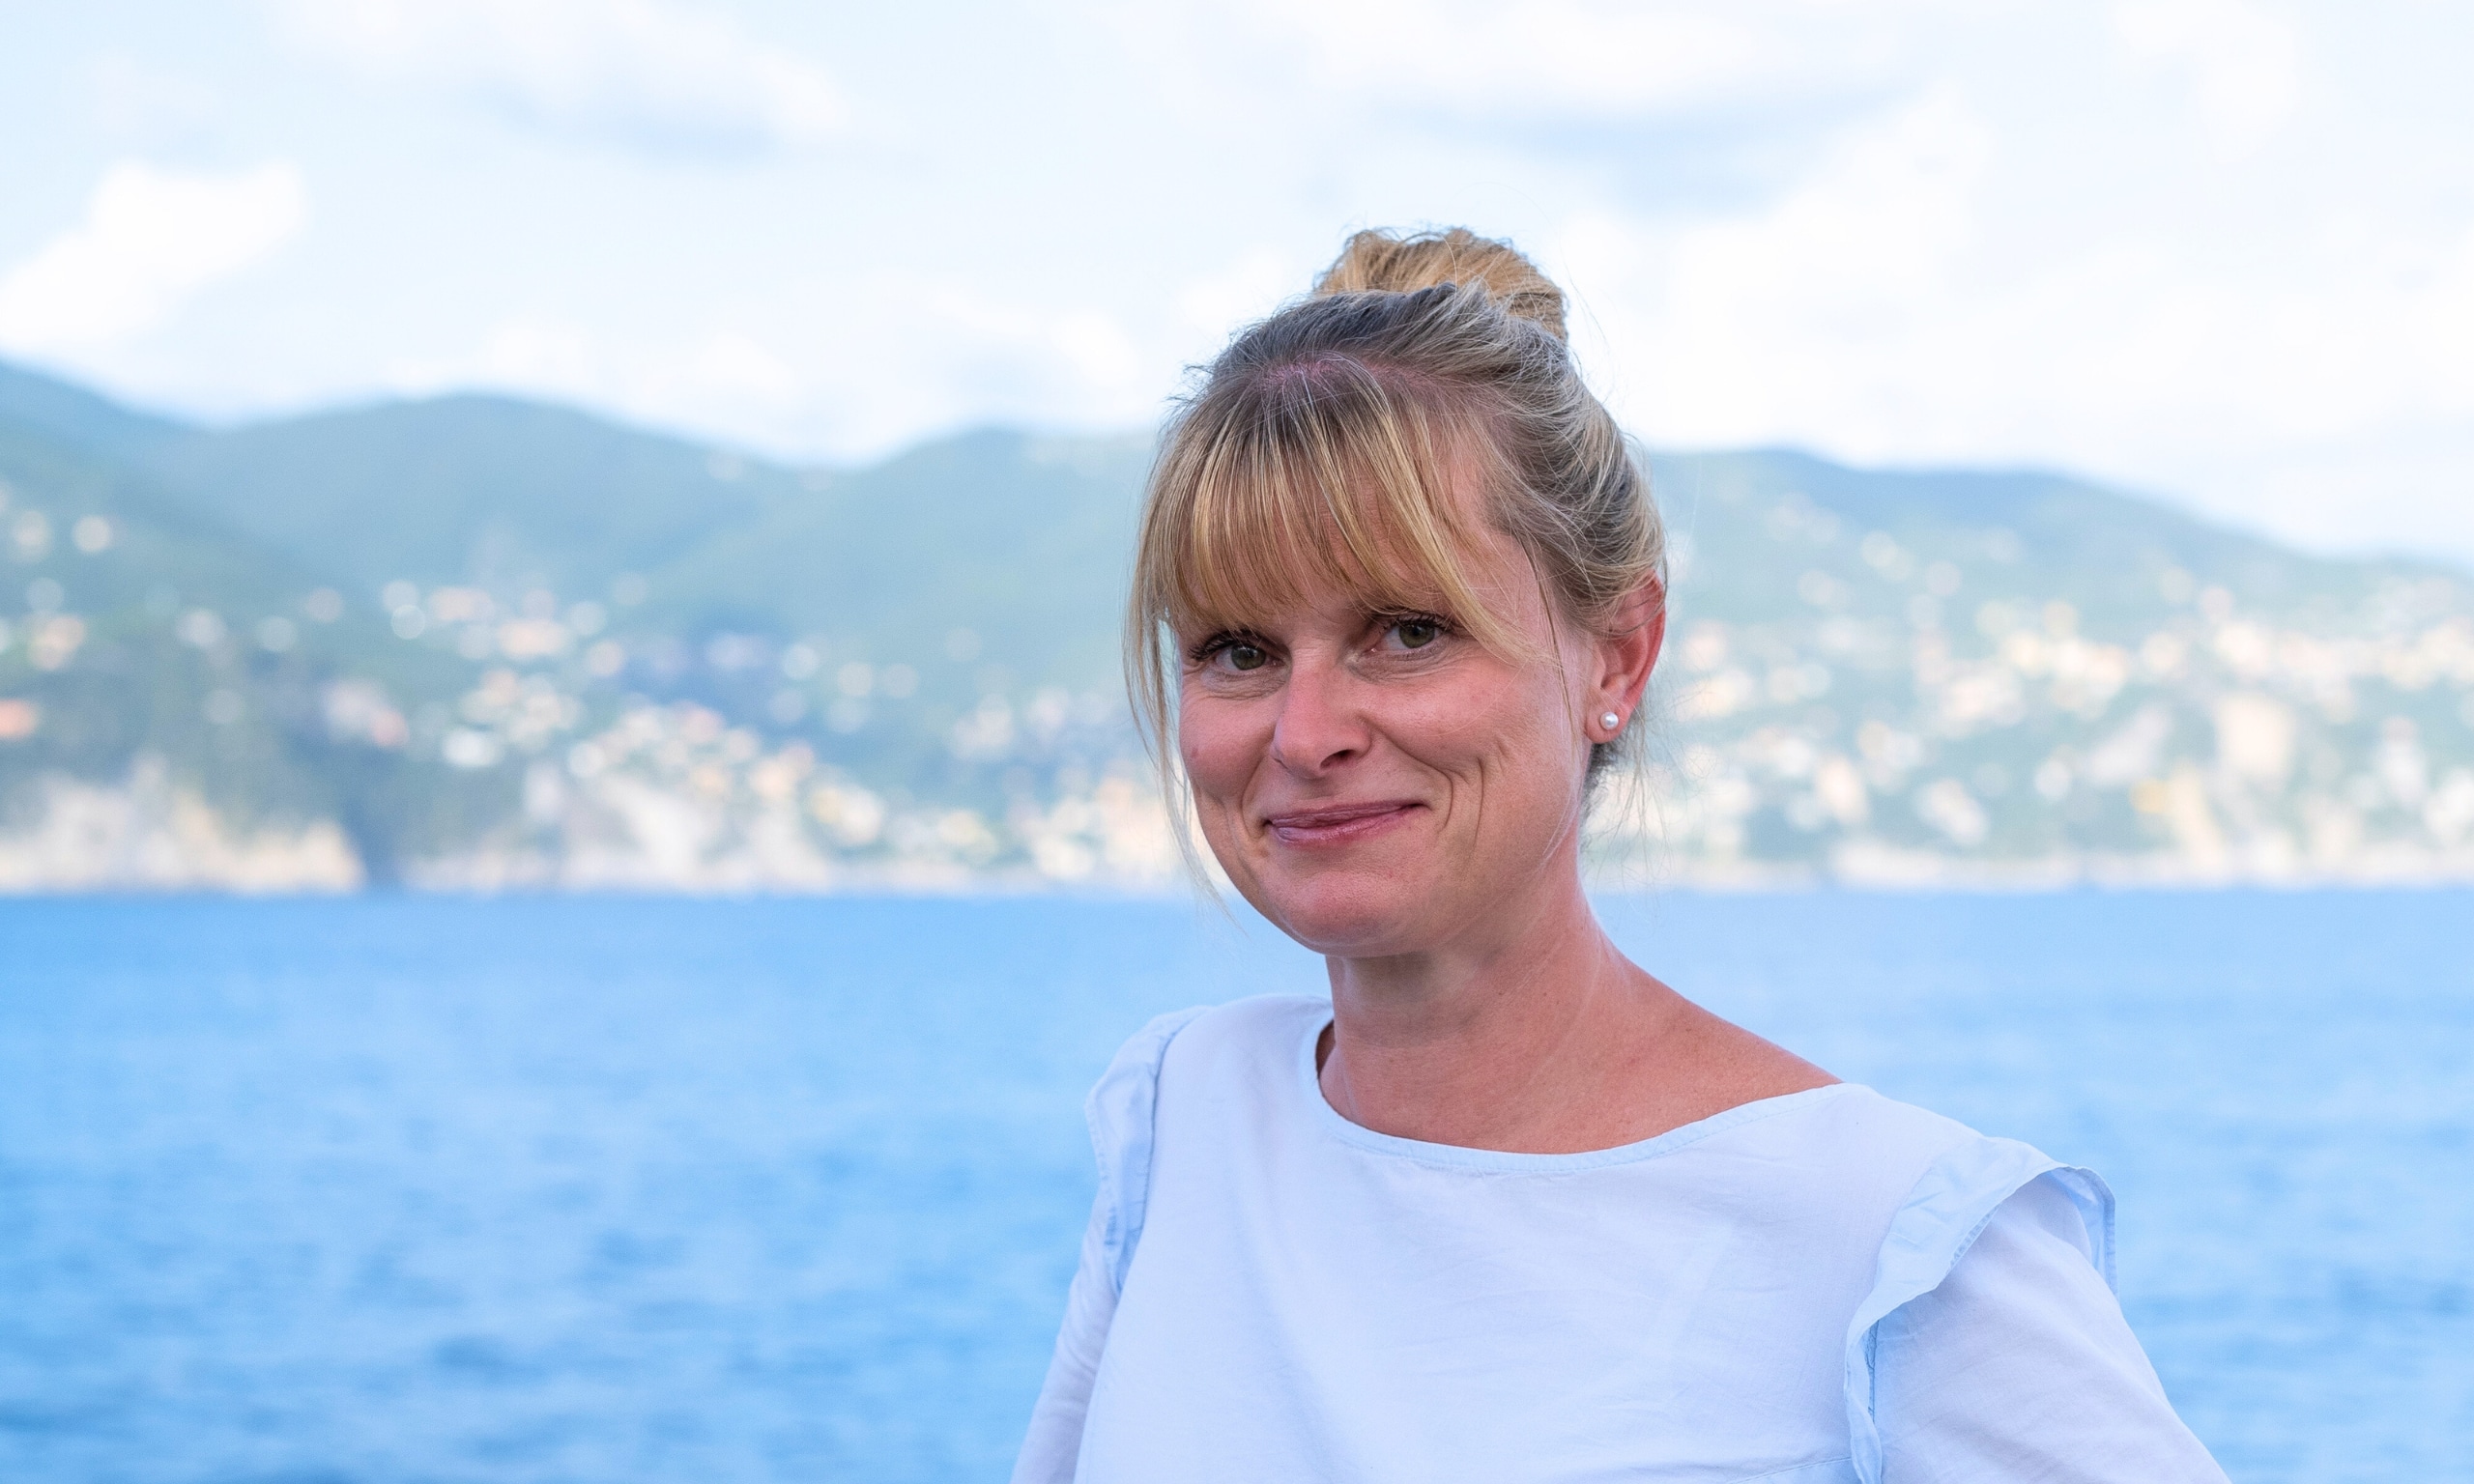 Kerstin Jung, Senior Charter Manager at OceanEvent GmbH